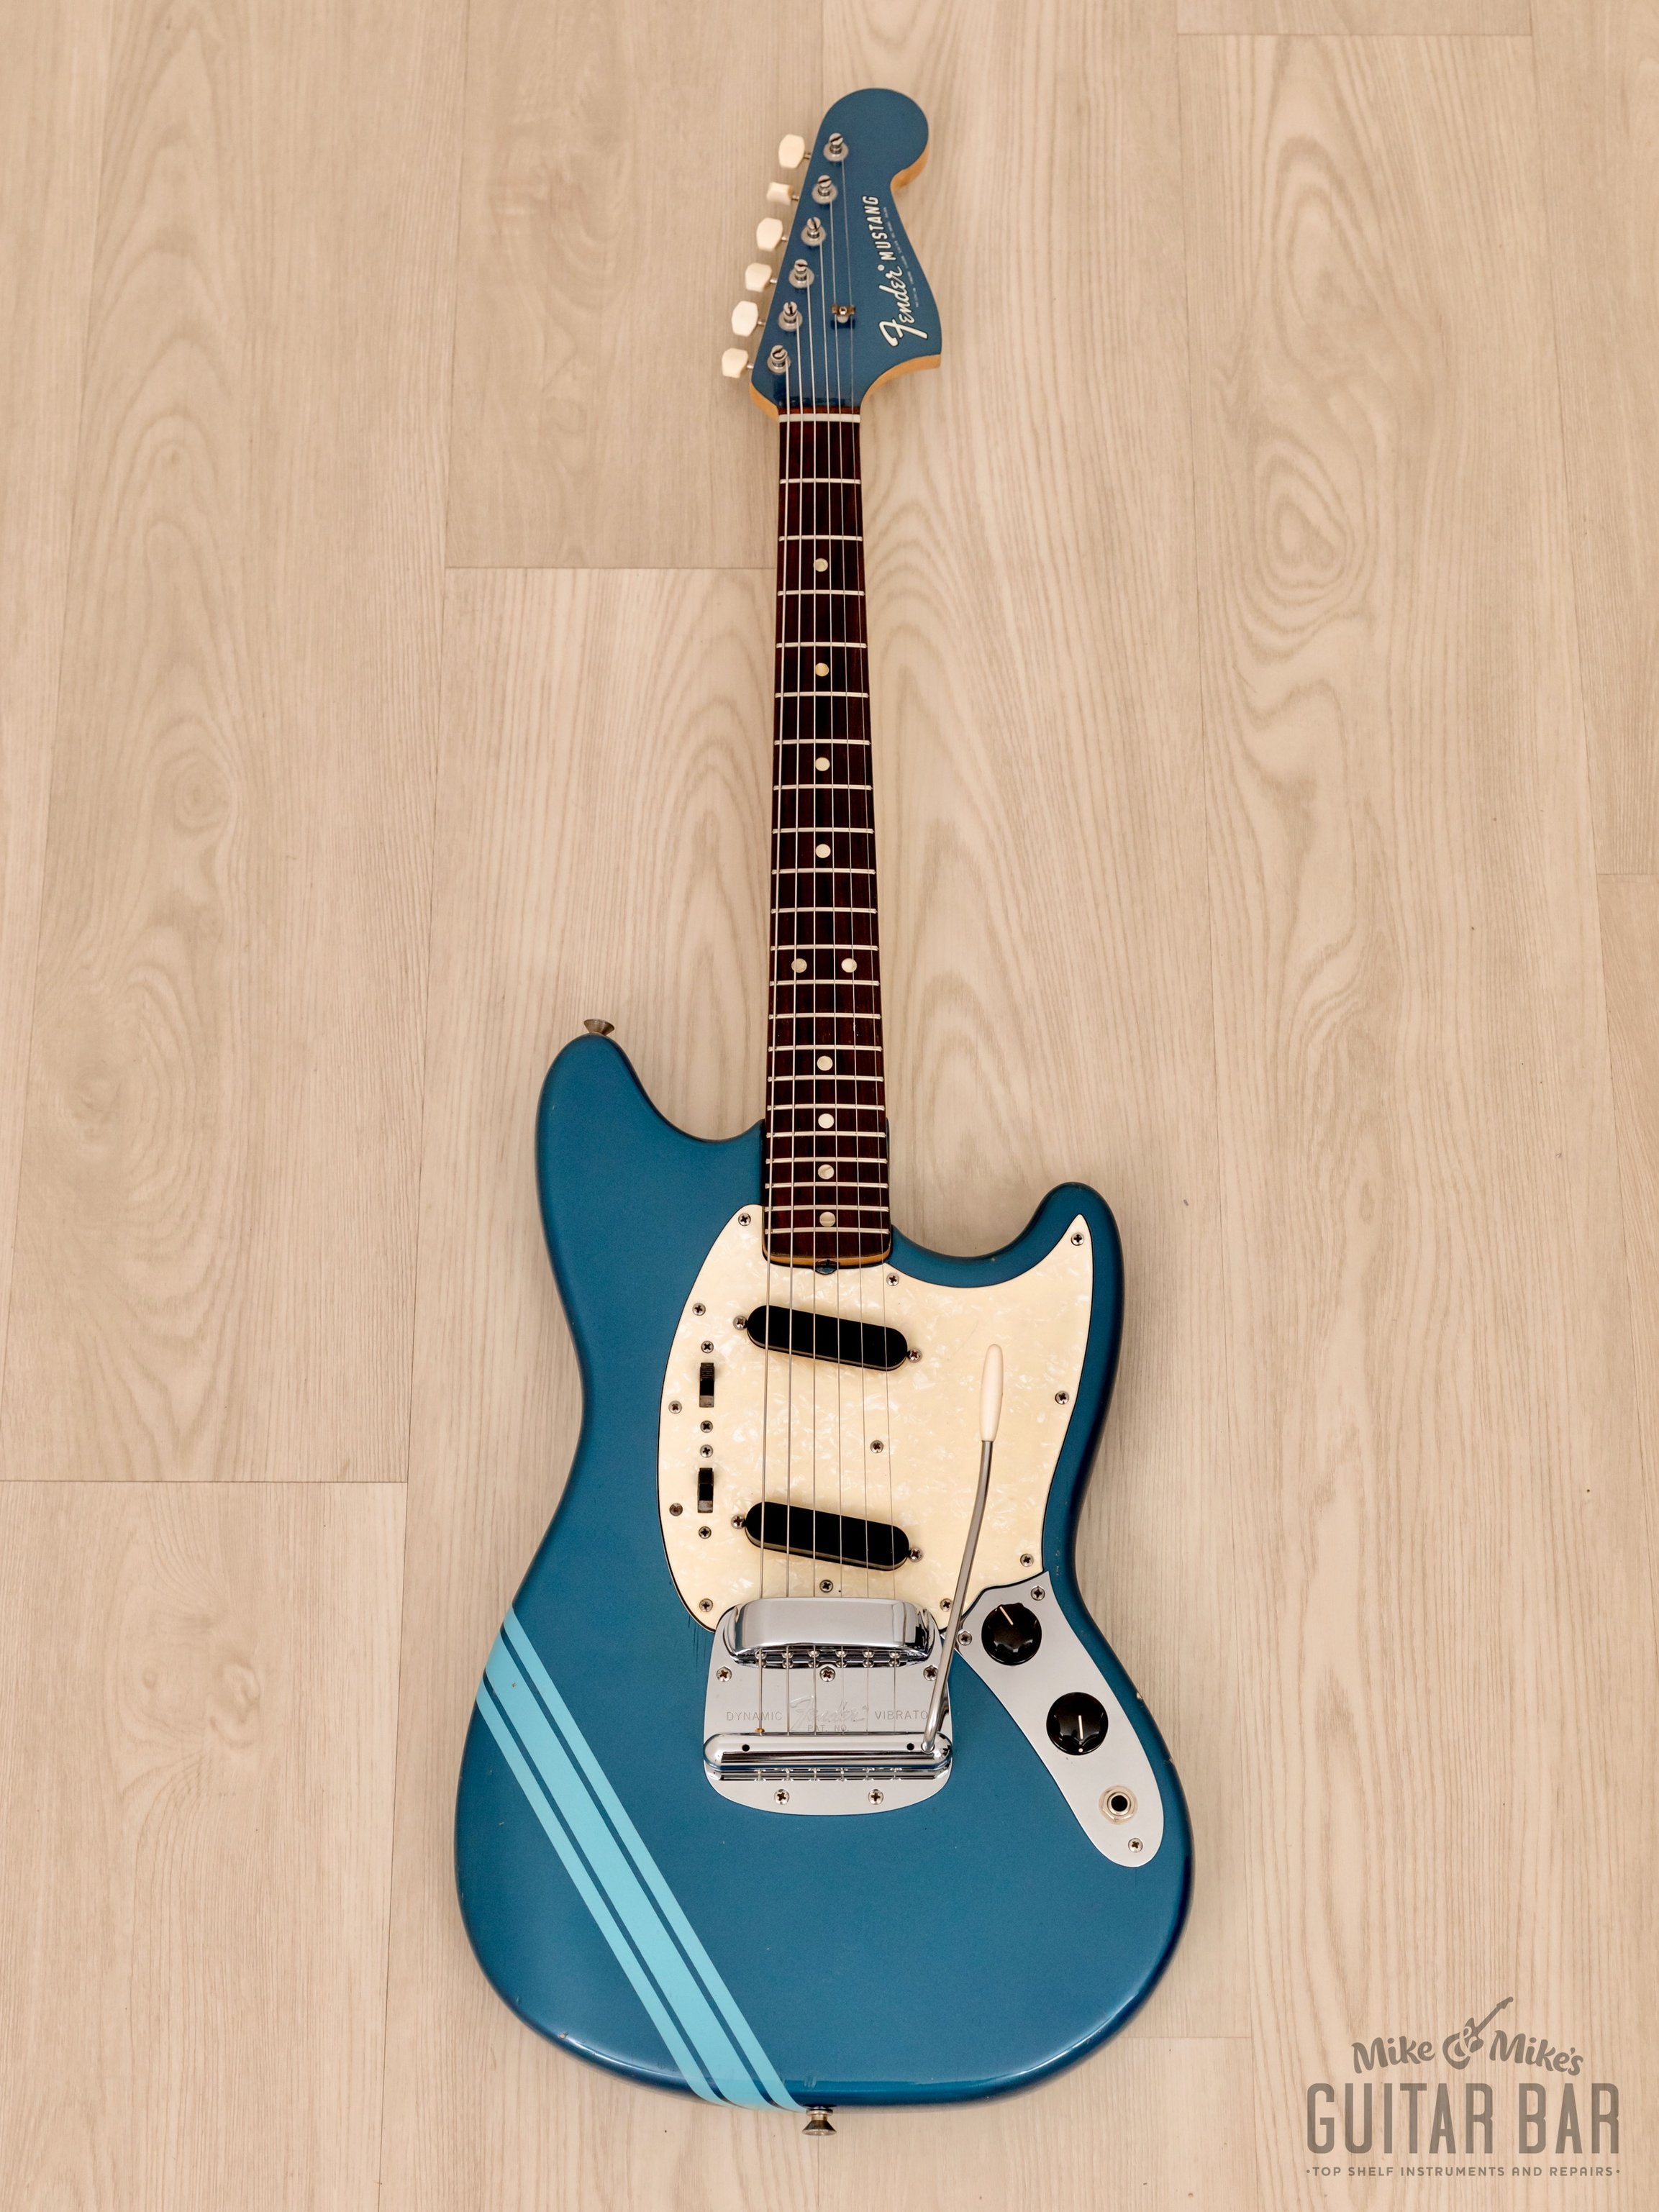 1970 Fender Competition Mustang Vintage Guitar Competition Burgundy, 100% Original w/ Case